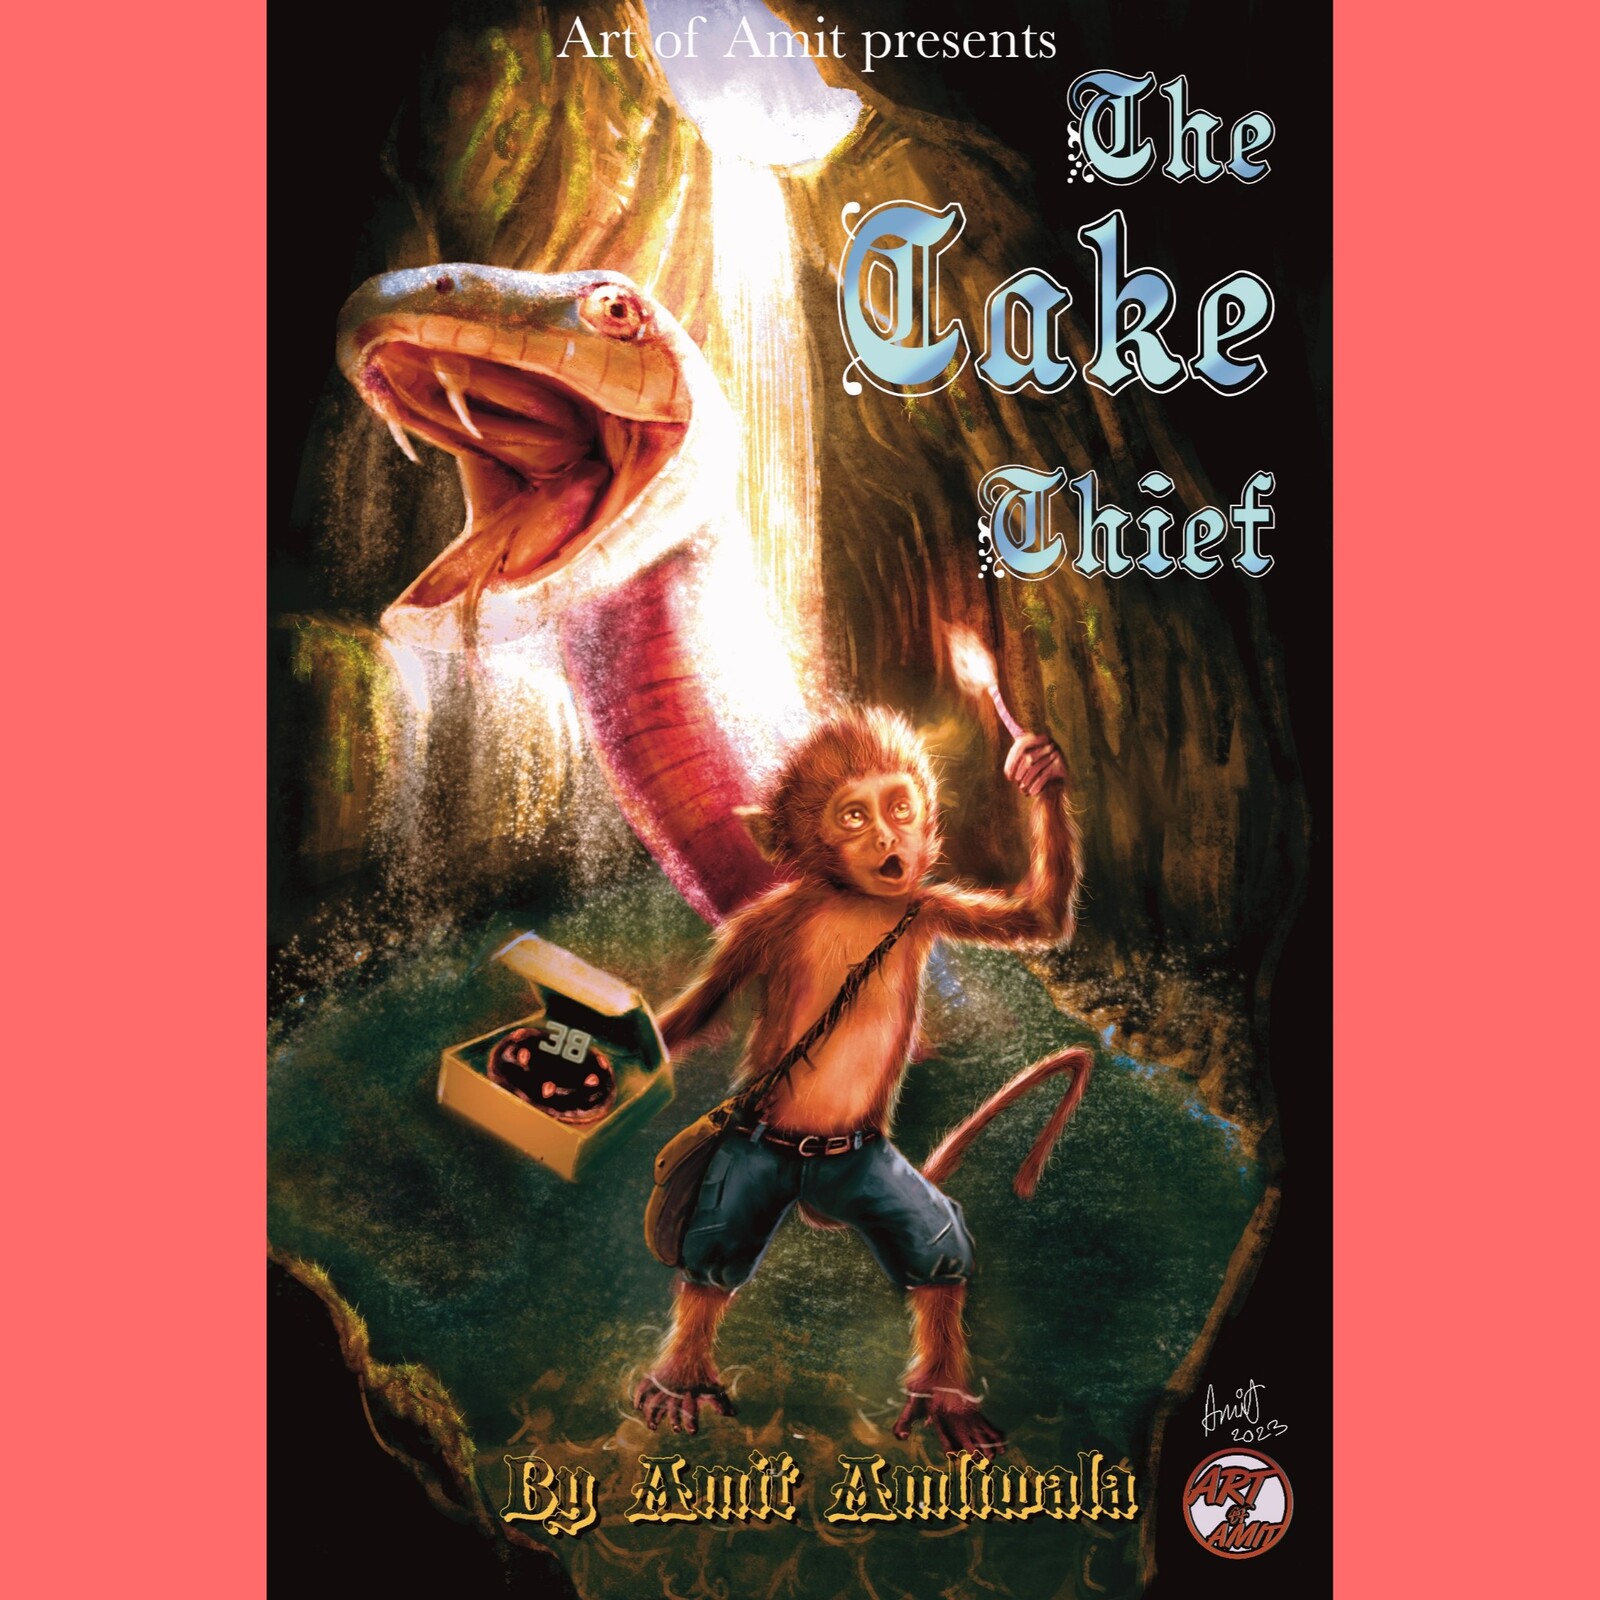 The cake thief